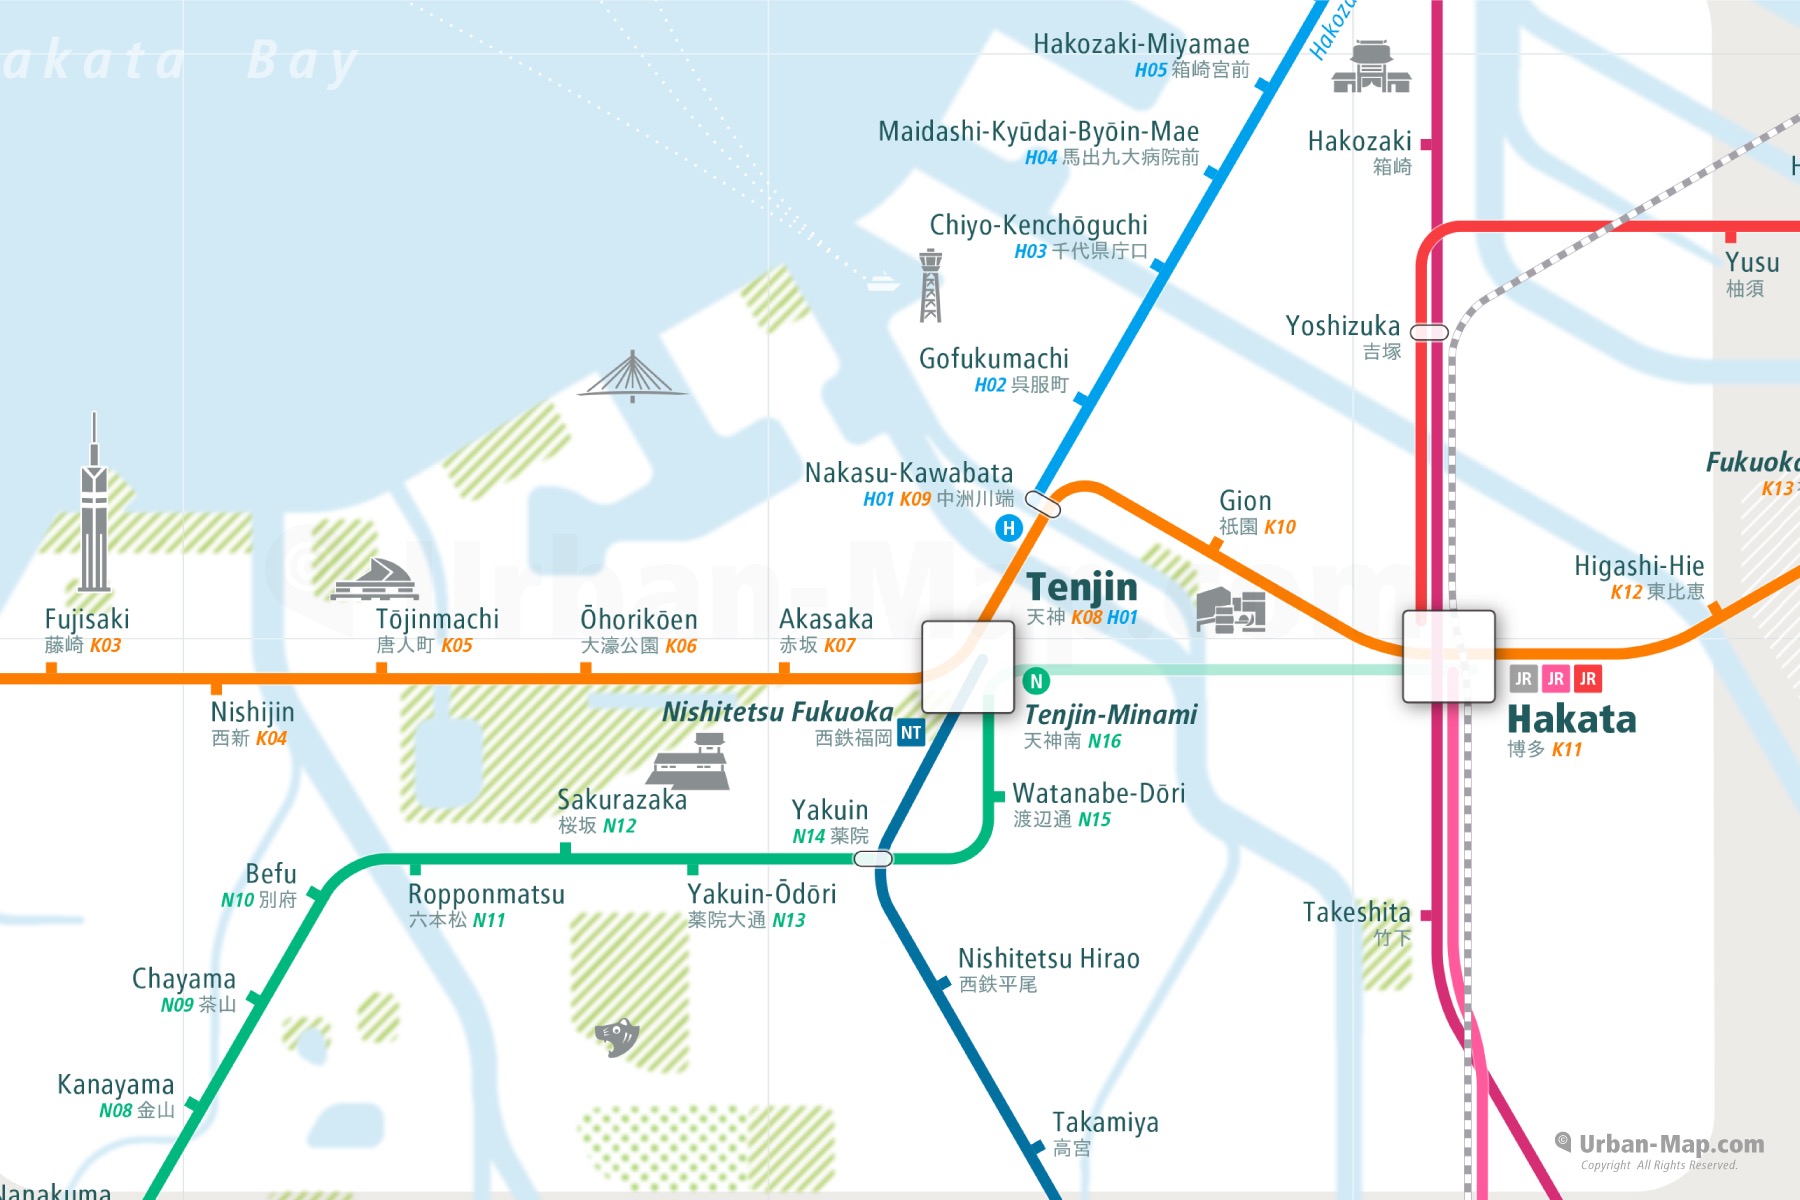 Fukuoka City Rail Map shows the train and public transportation routes of metro - Close-Up